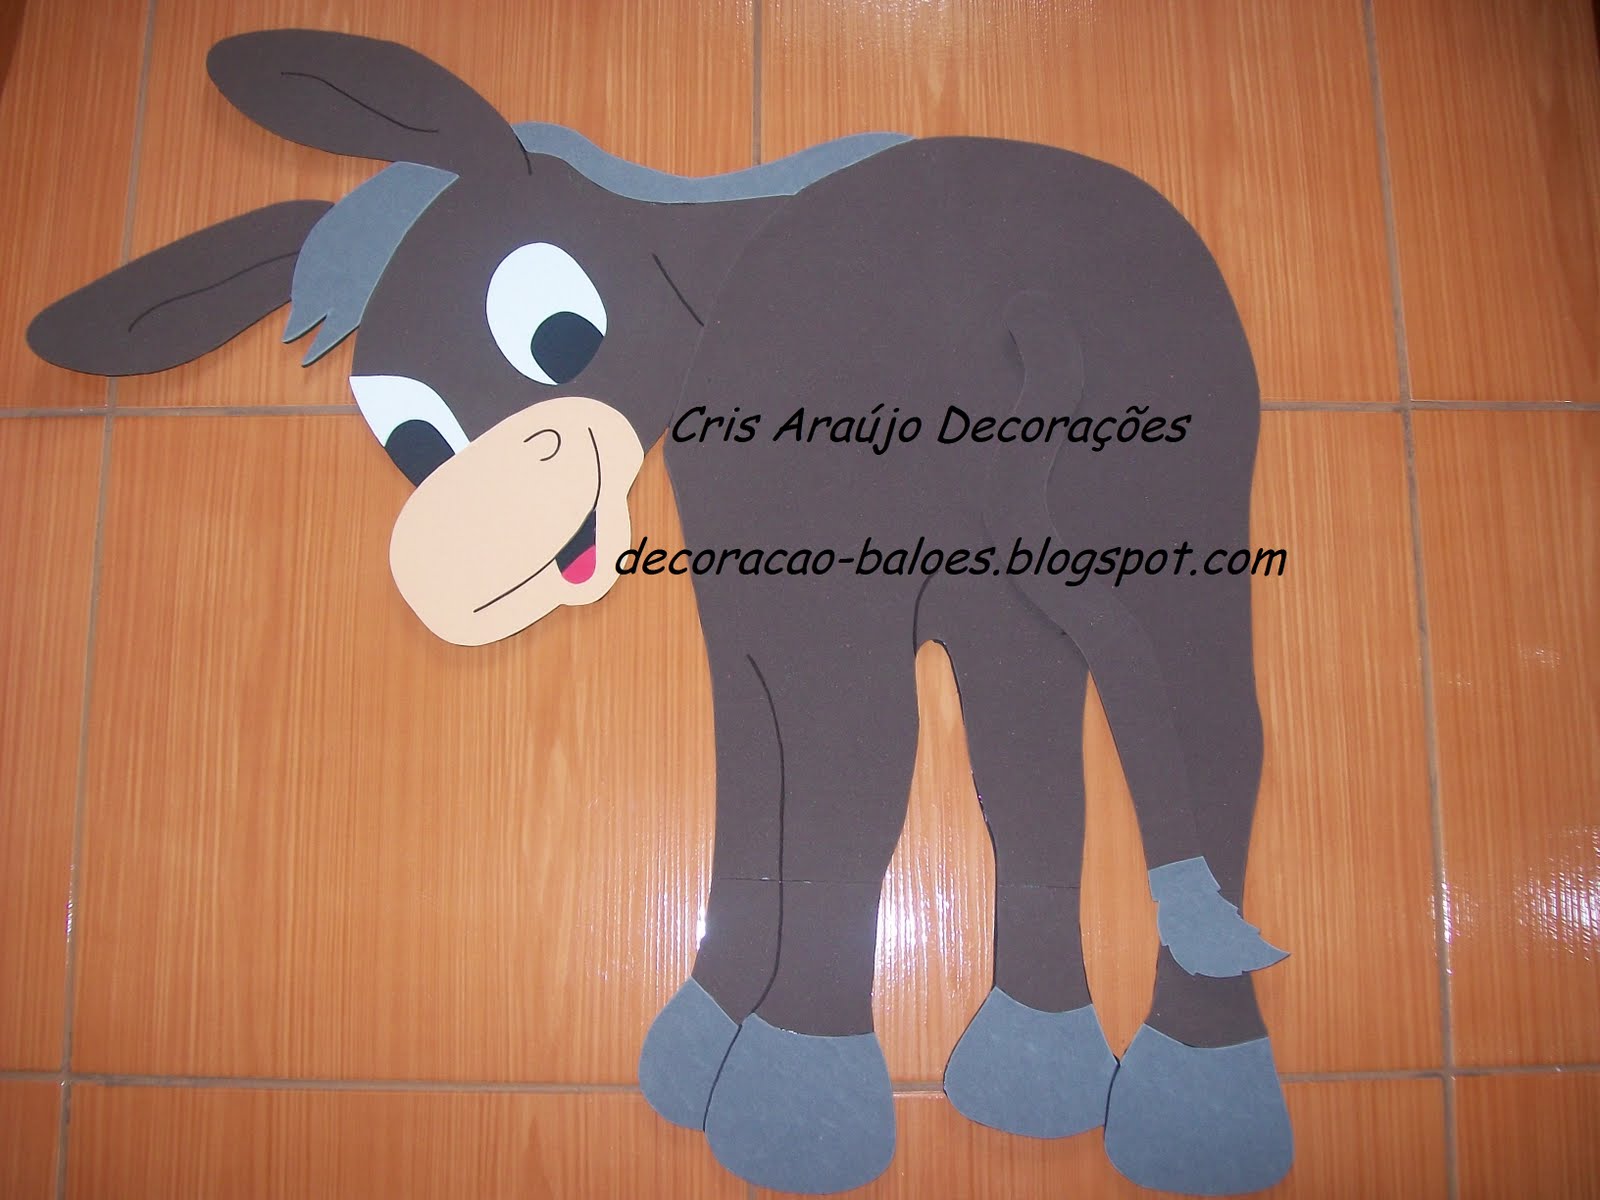 Painel Rabo de burro Festa Junina - Festcolor - Shop Macrozao